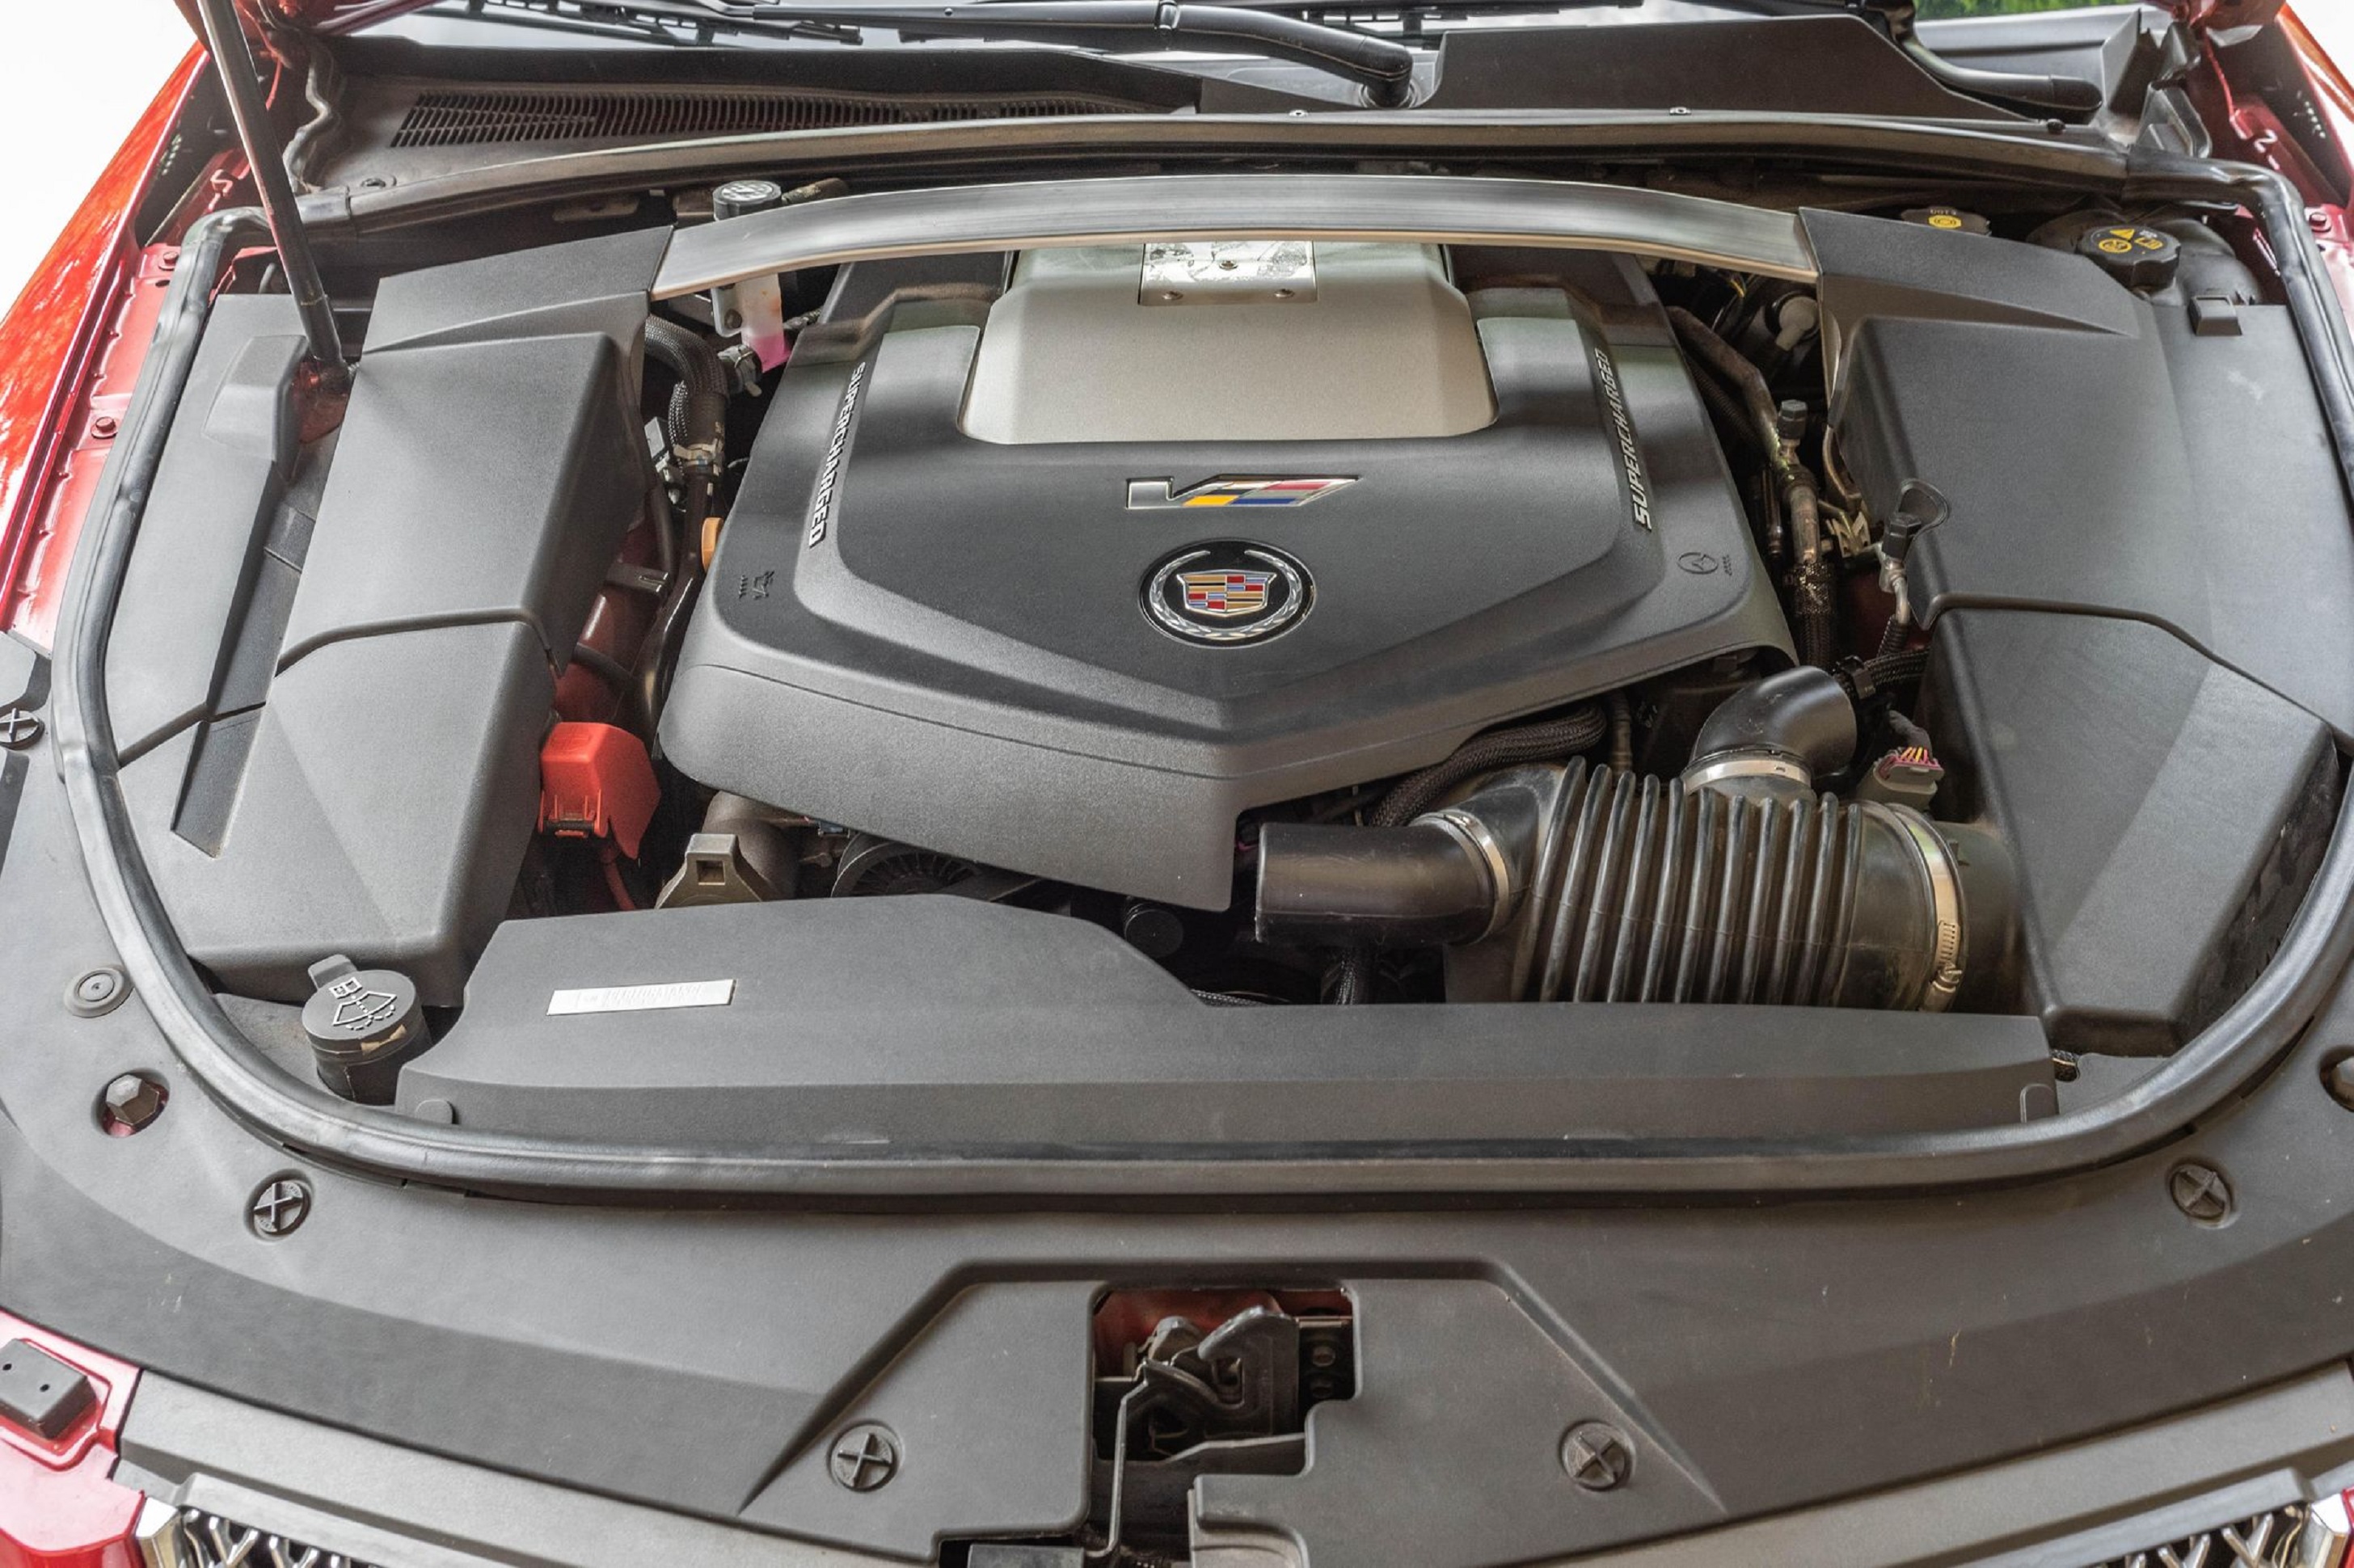 A supercharged V8 from a 2011 Cadillac CTS-V Sedan